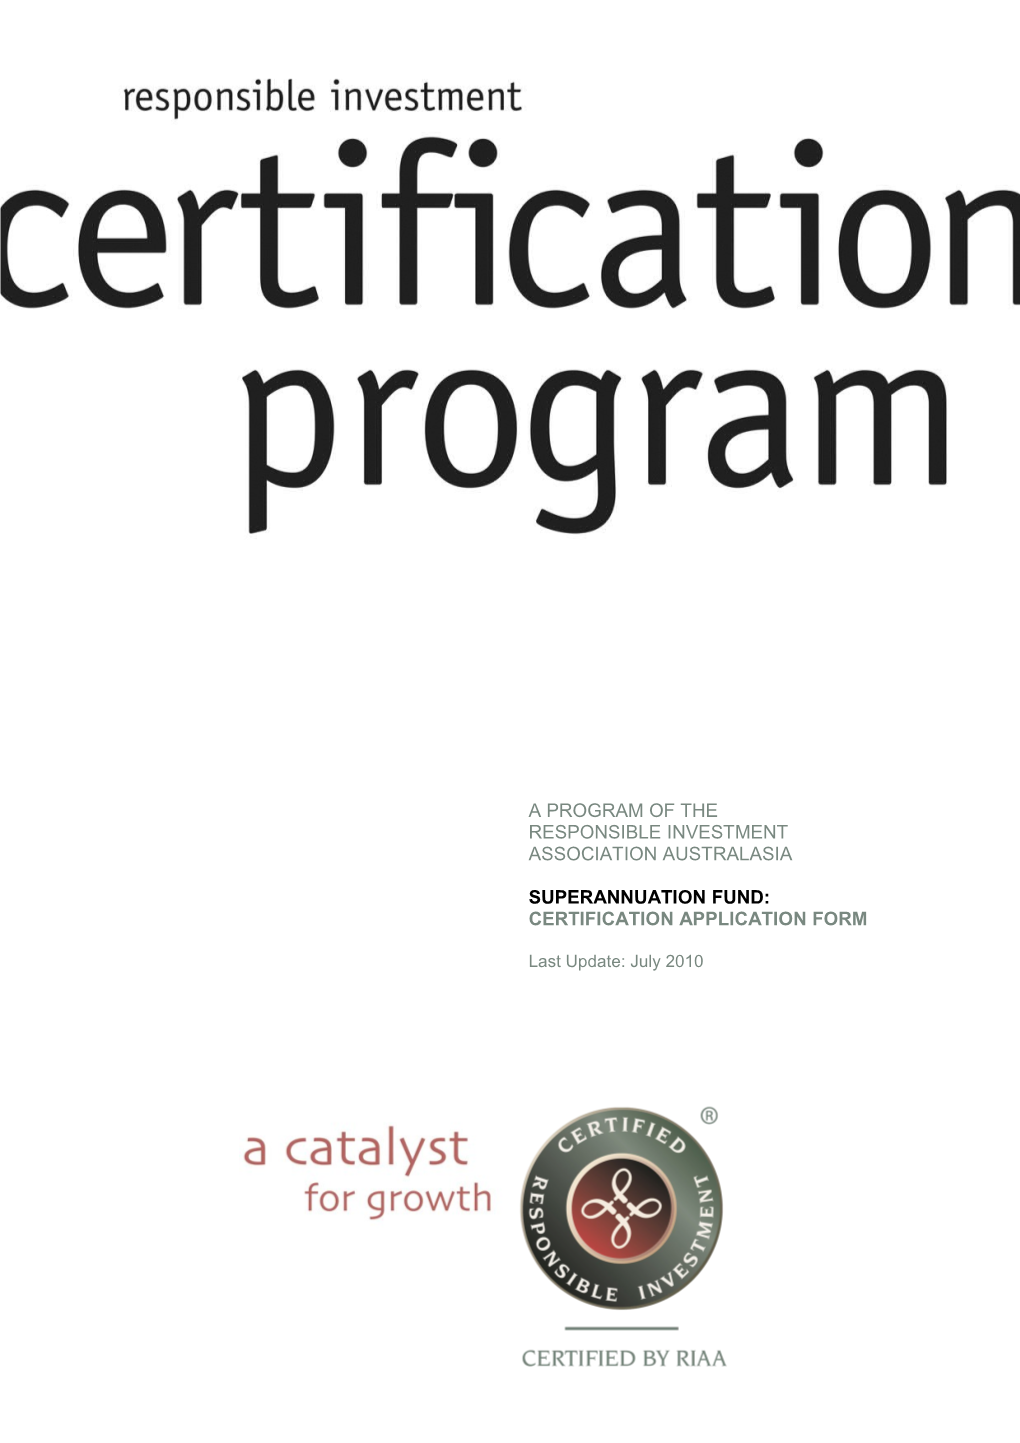 SRI Certification Program